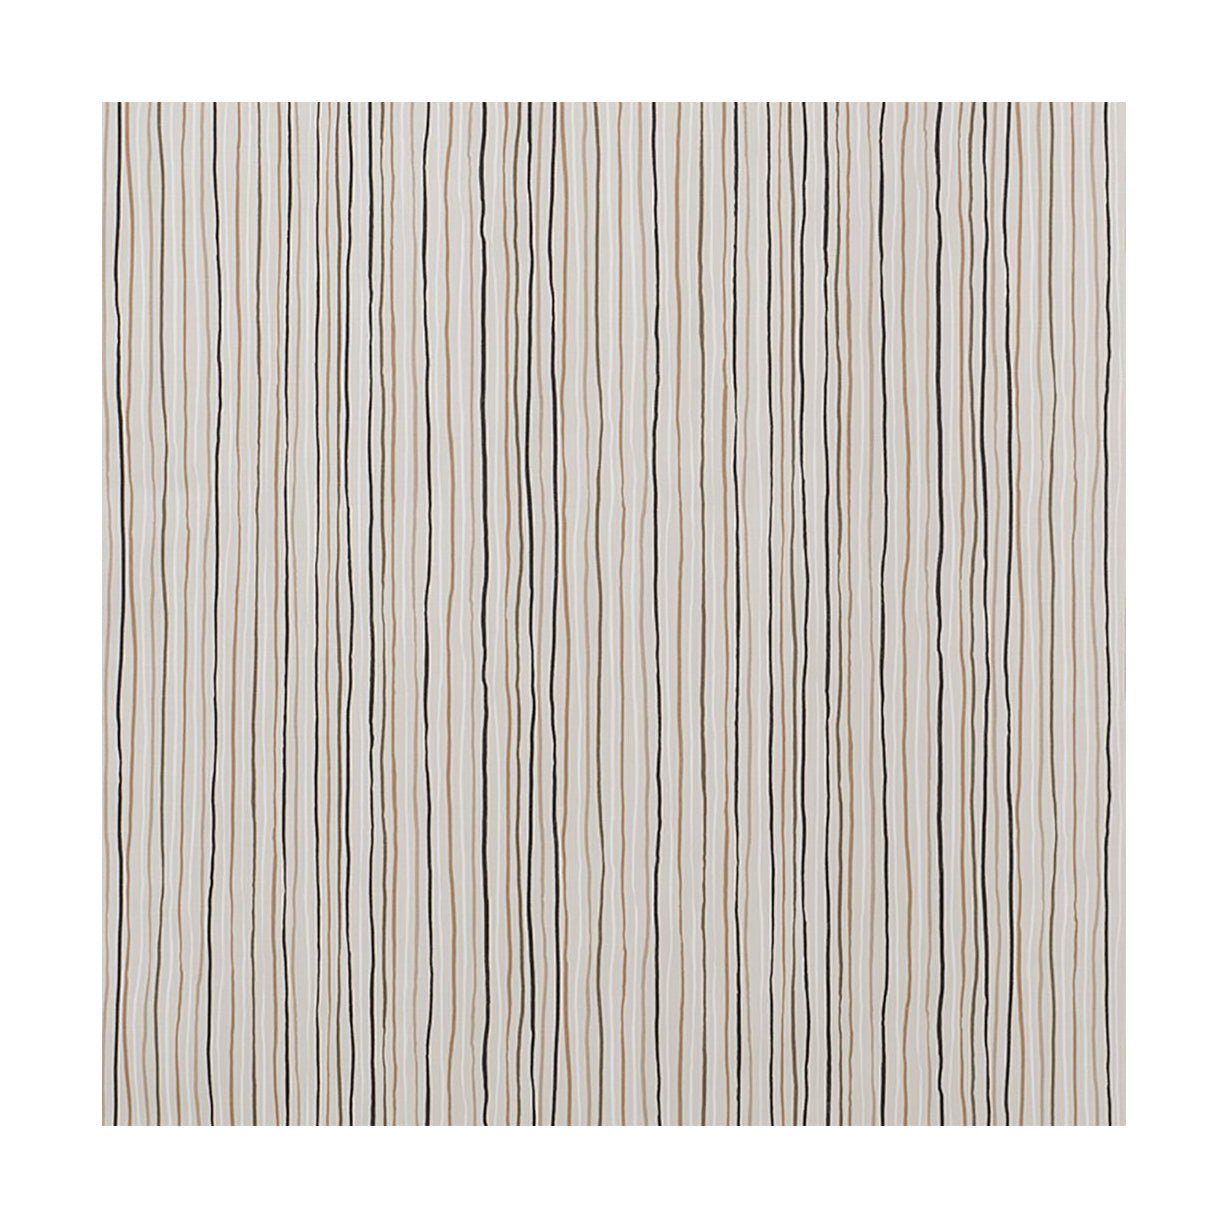 Spira Stripe CTC -tyg med akrylbredd 145 cm (pris per meter), Multi Natural